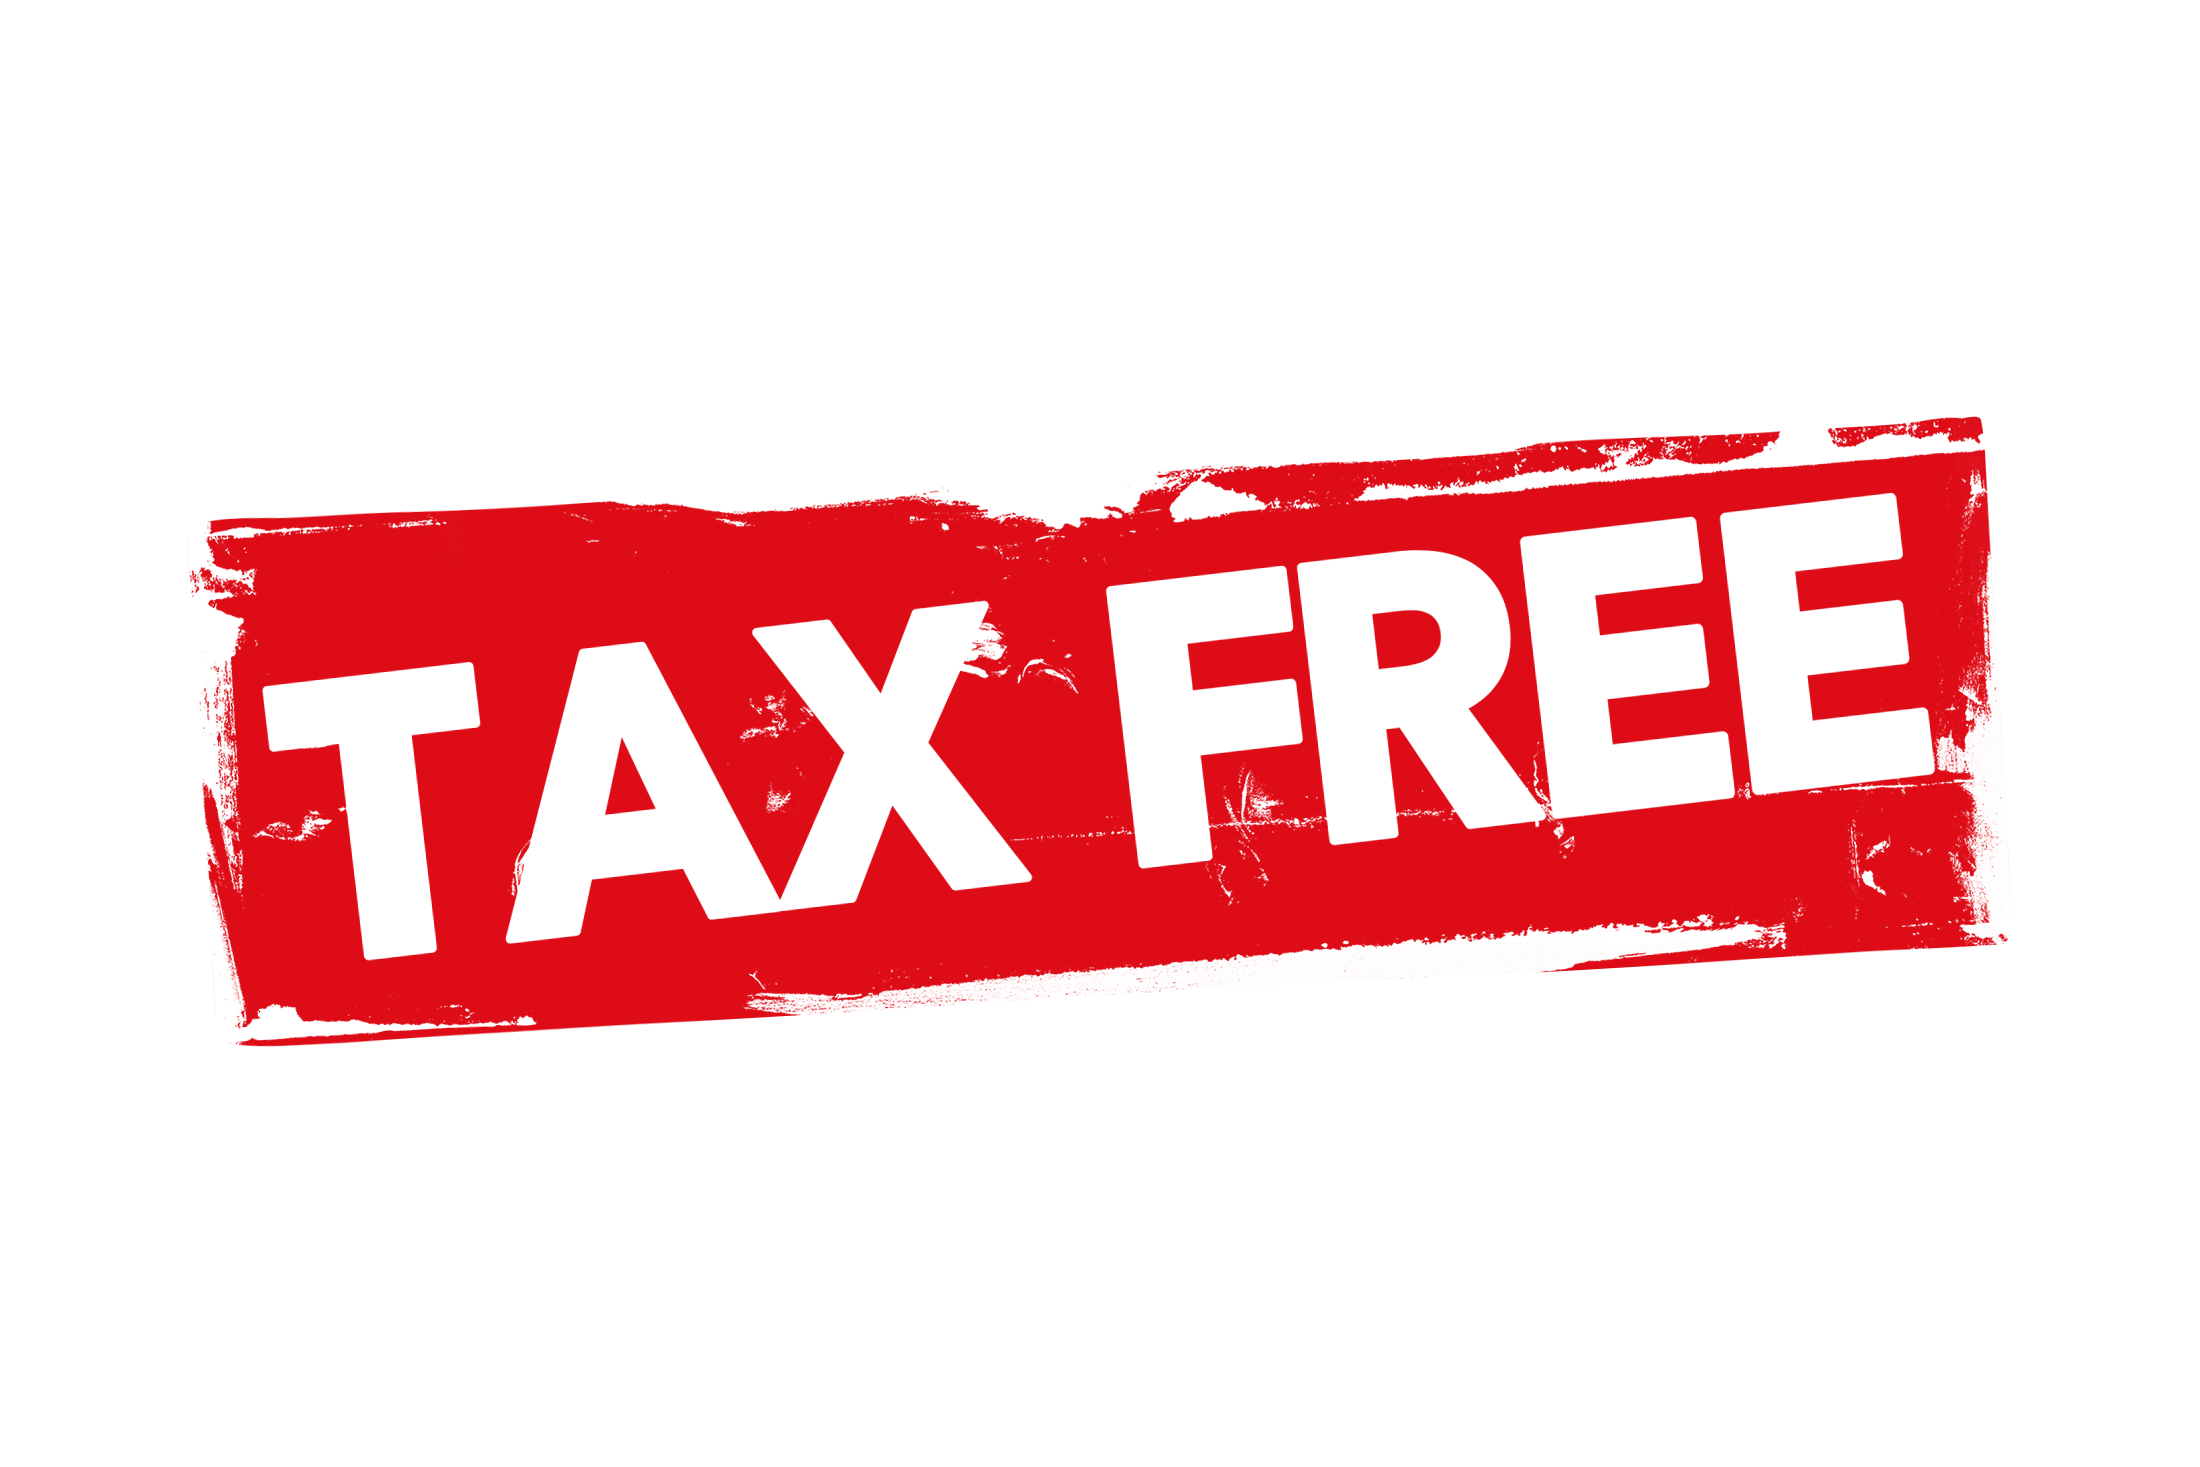 Grunge tax free label PSD